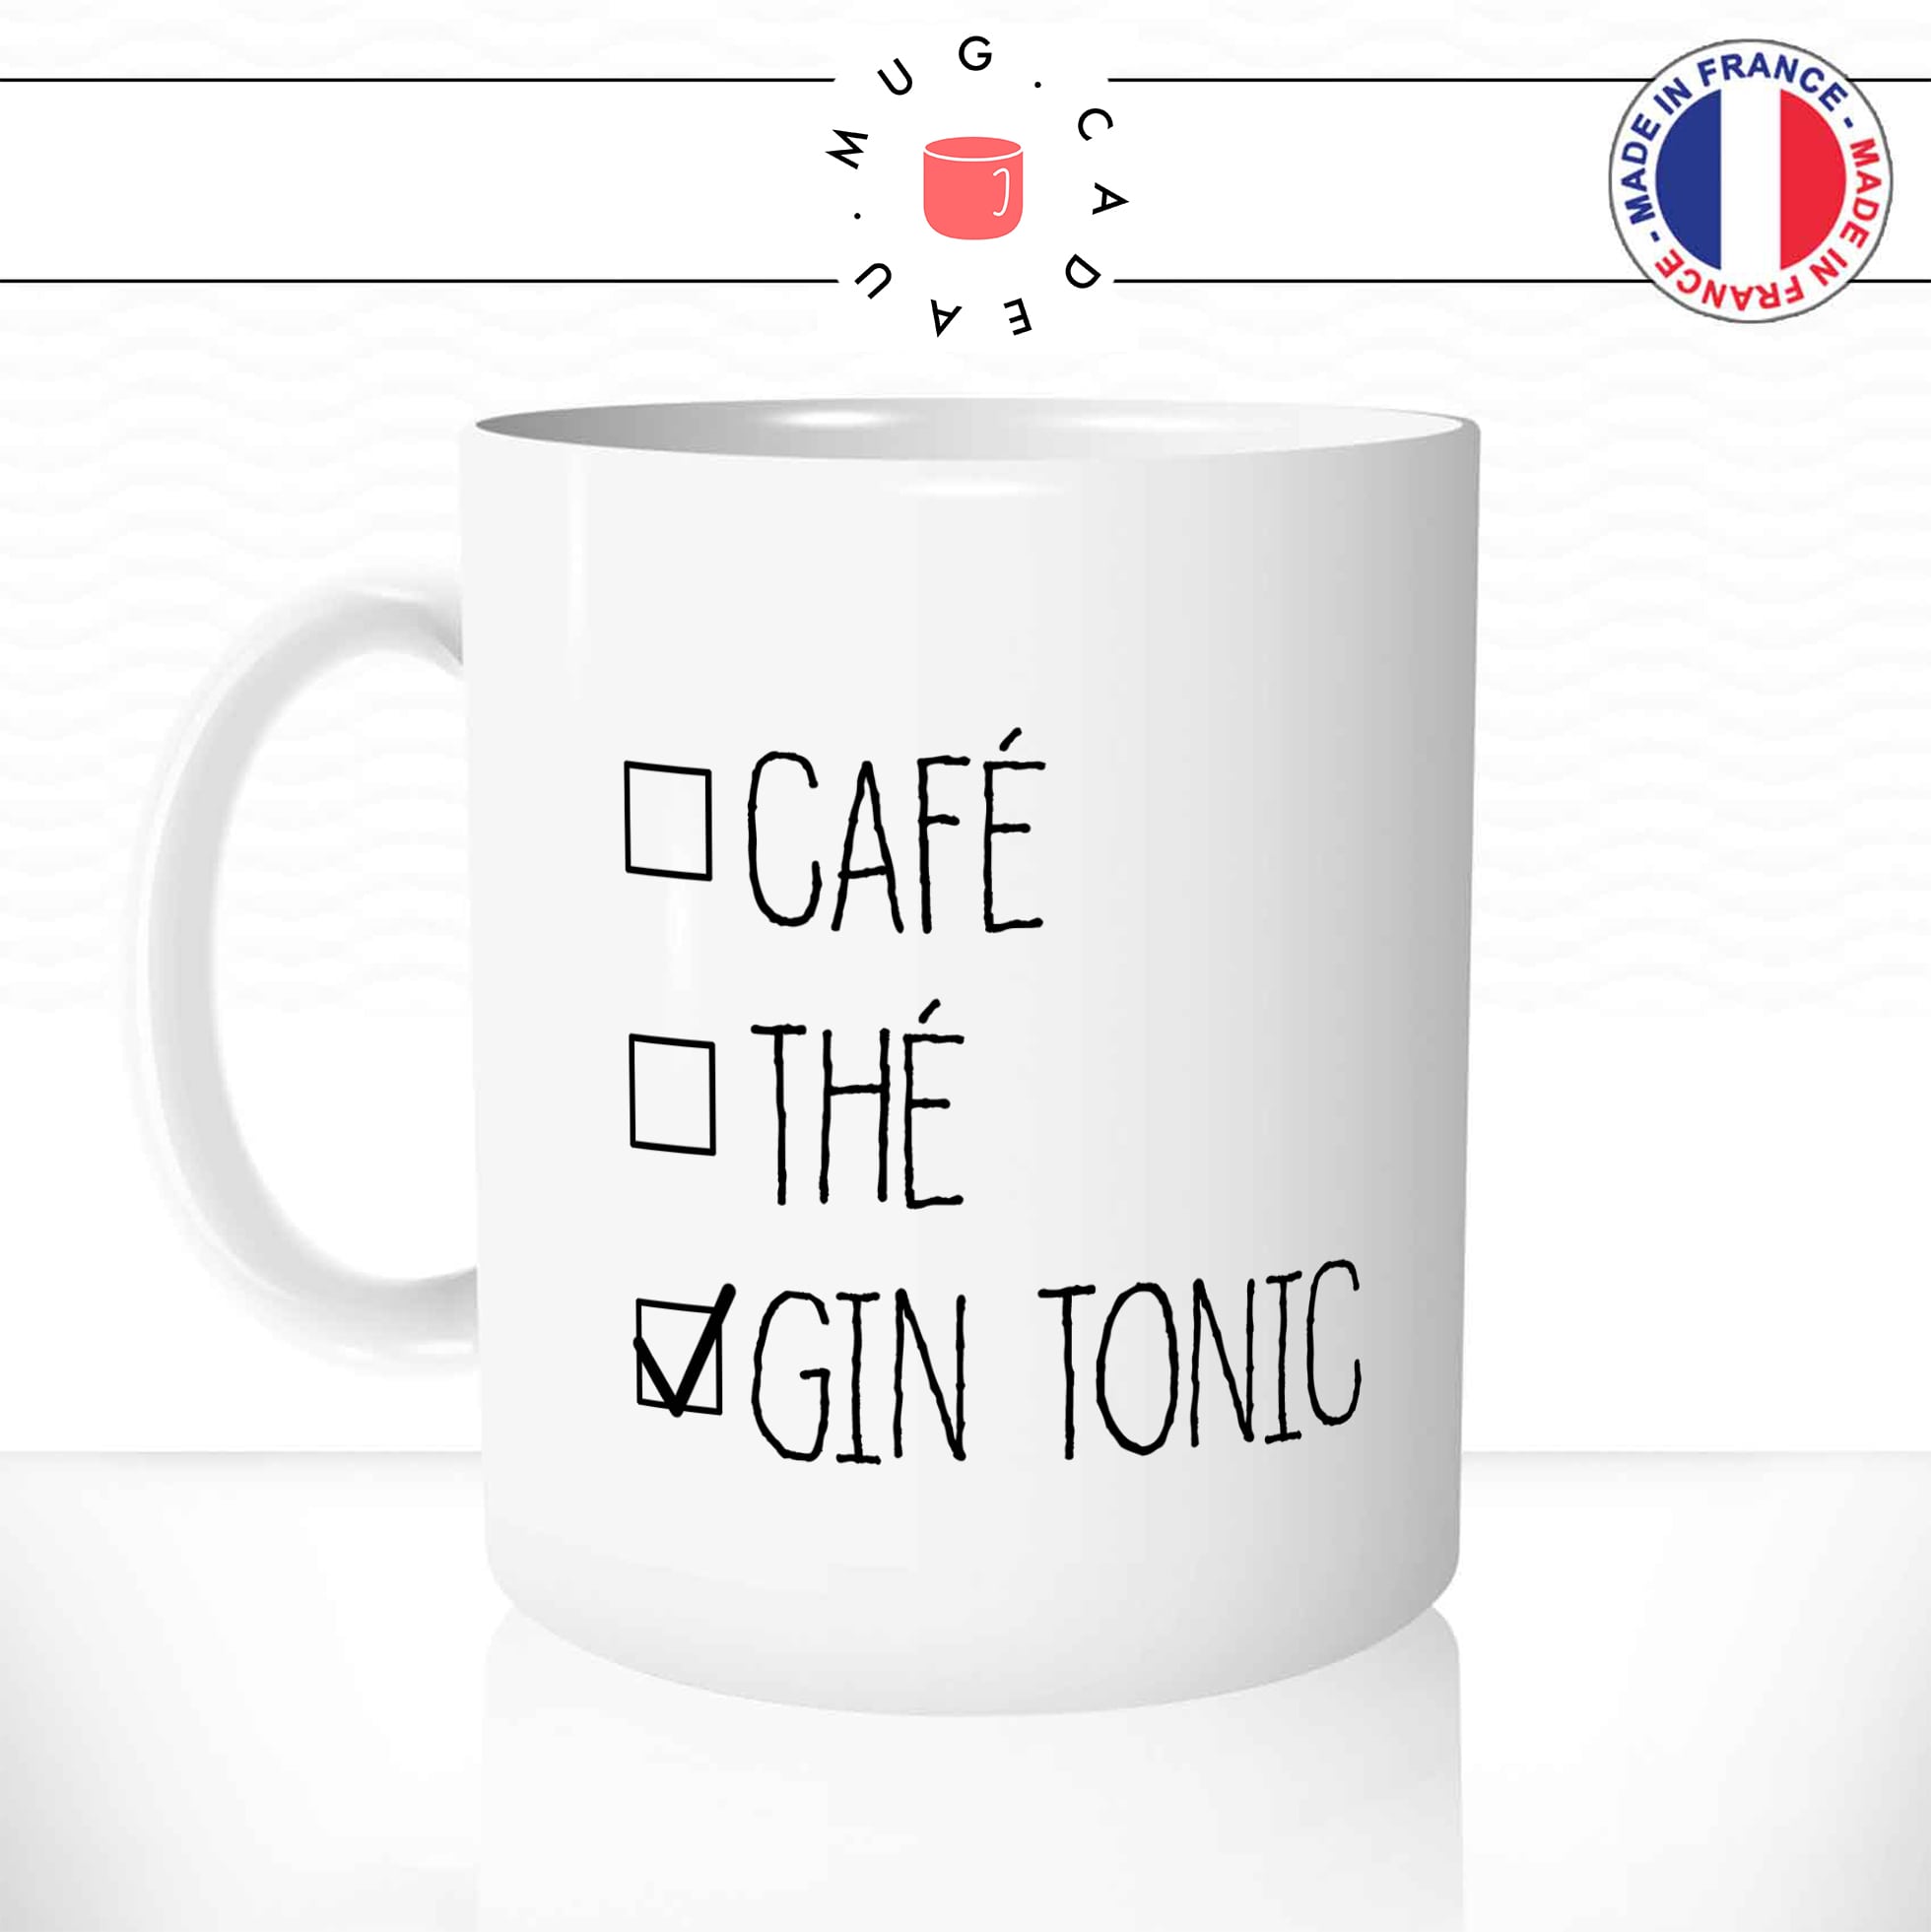 mug-tasse-coffee-caf-the-gin-tonic-alcool-drole-energie-humour-fun-matin-reveil-cafe-the-mugs-tasses-idee-cadeau-original-personnalisee-min.jpeg